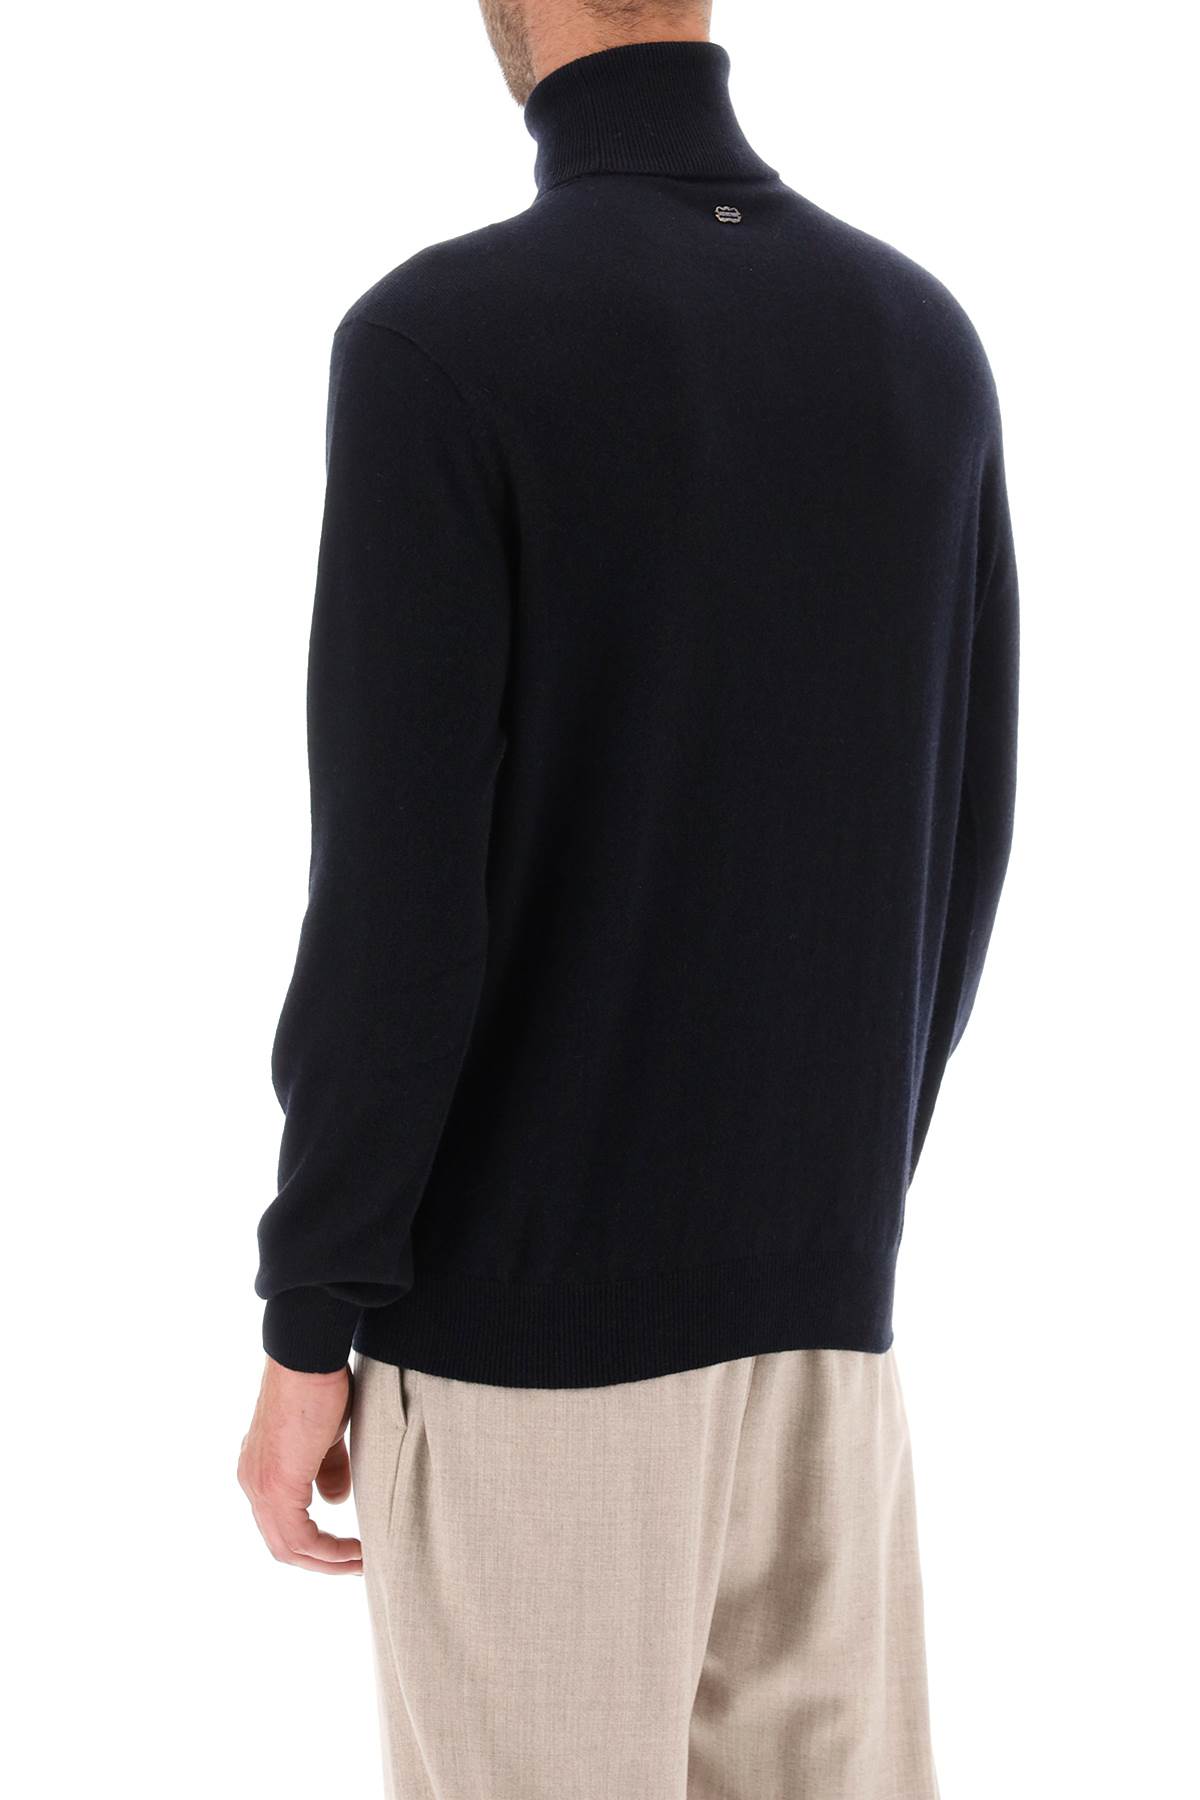 Agnona Seamless Cashmere Turtleneck Sweater Men - Walmart.com